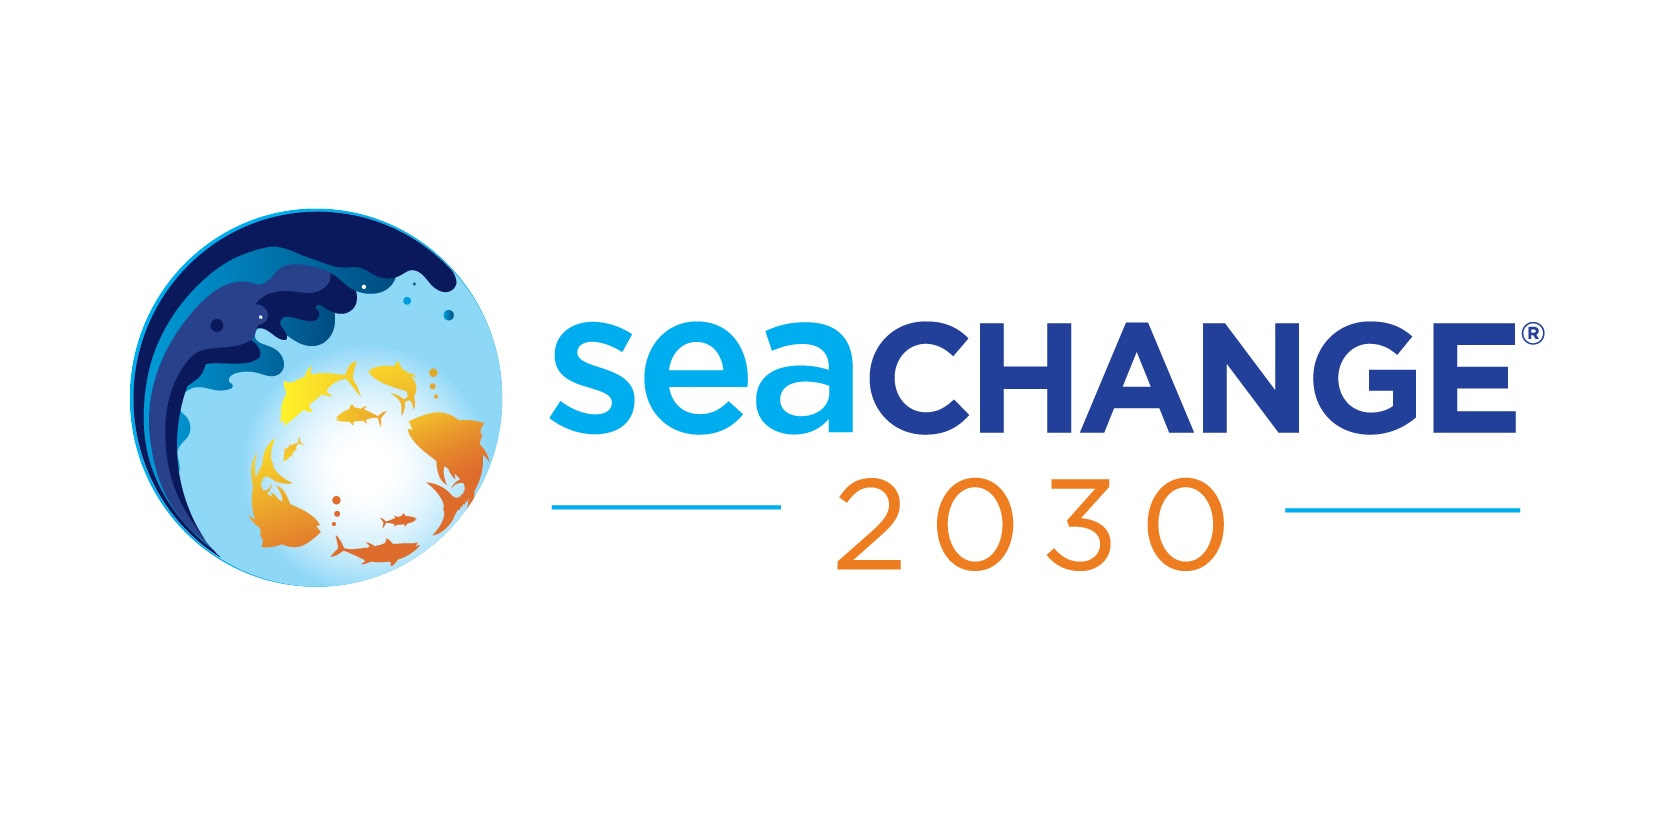 SeaChange® 2030